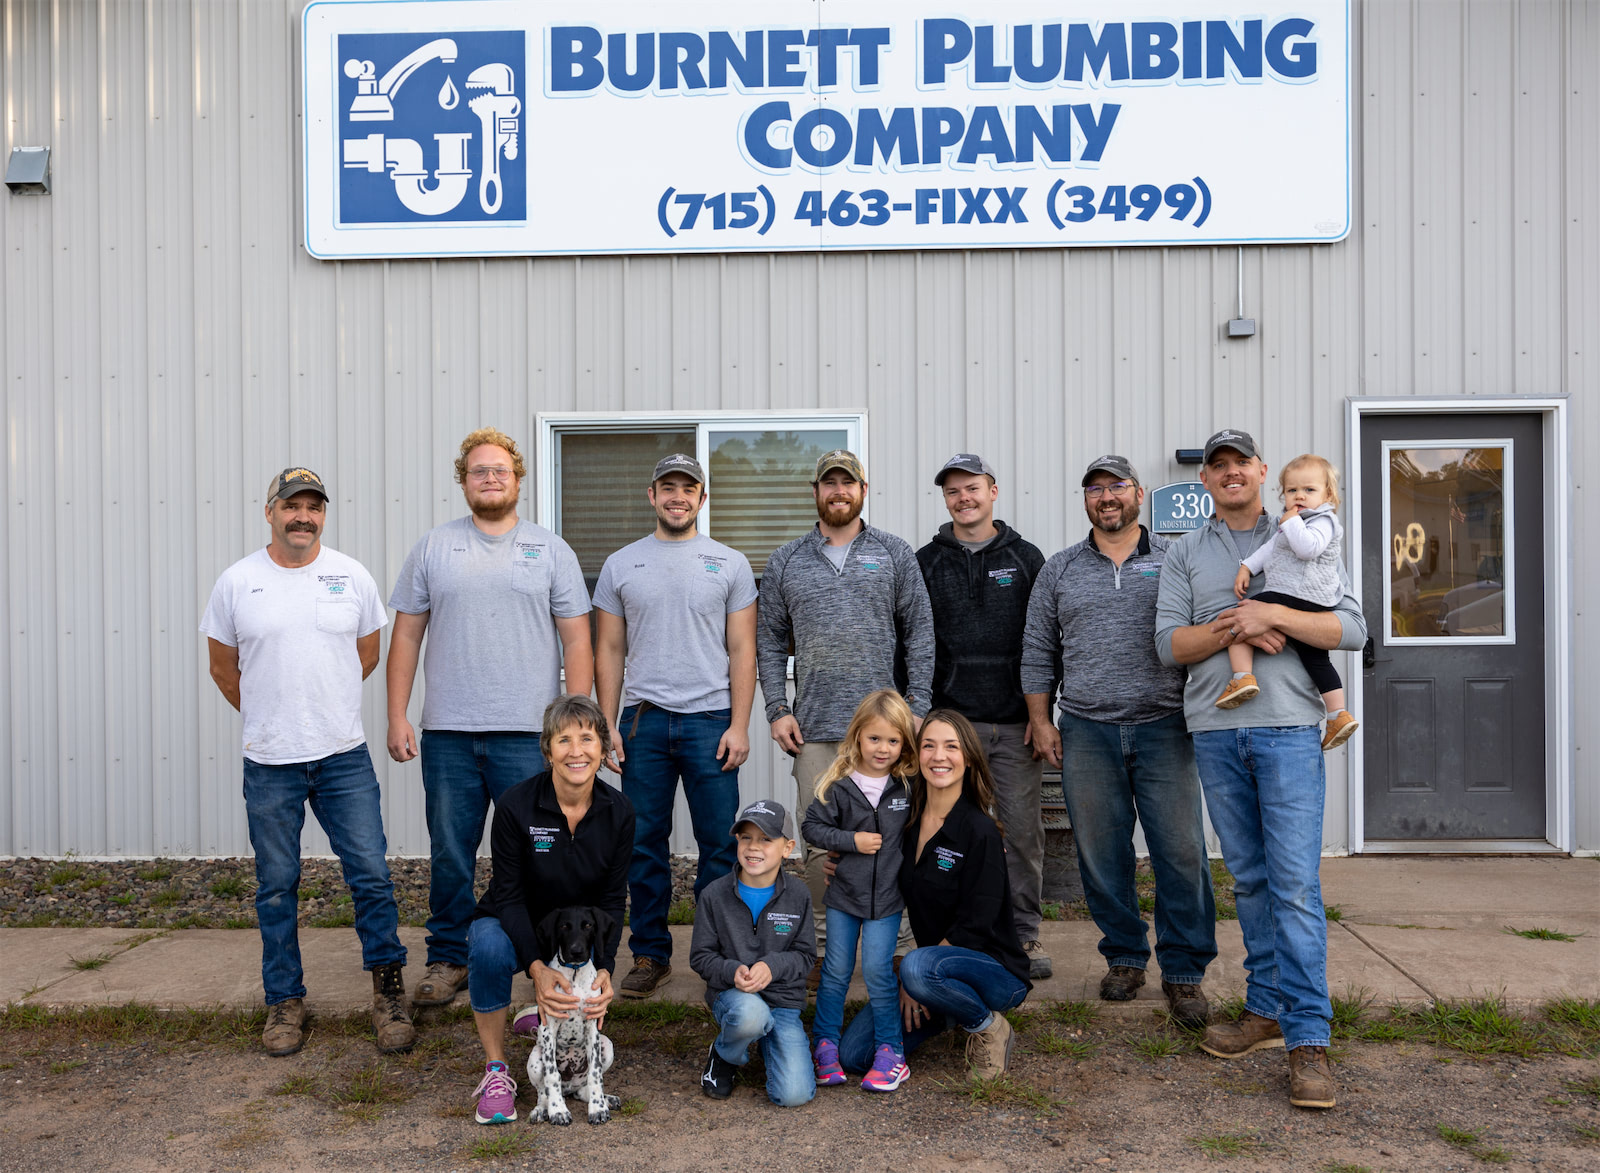 A close-up group photo of Burnett plumbing company employees.